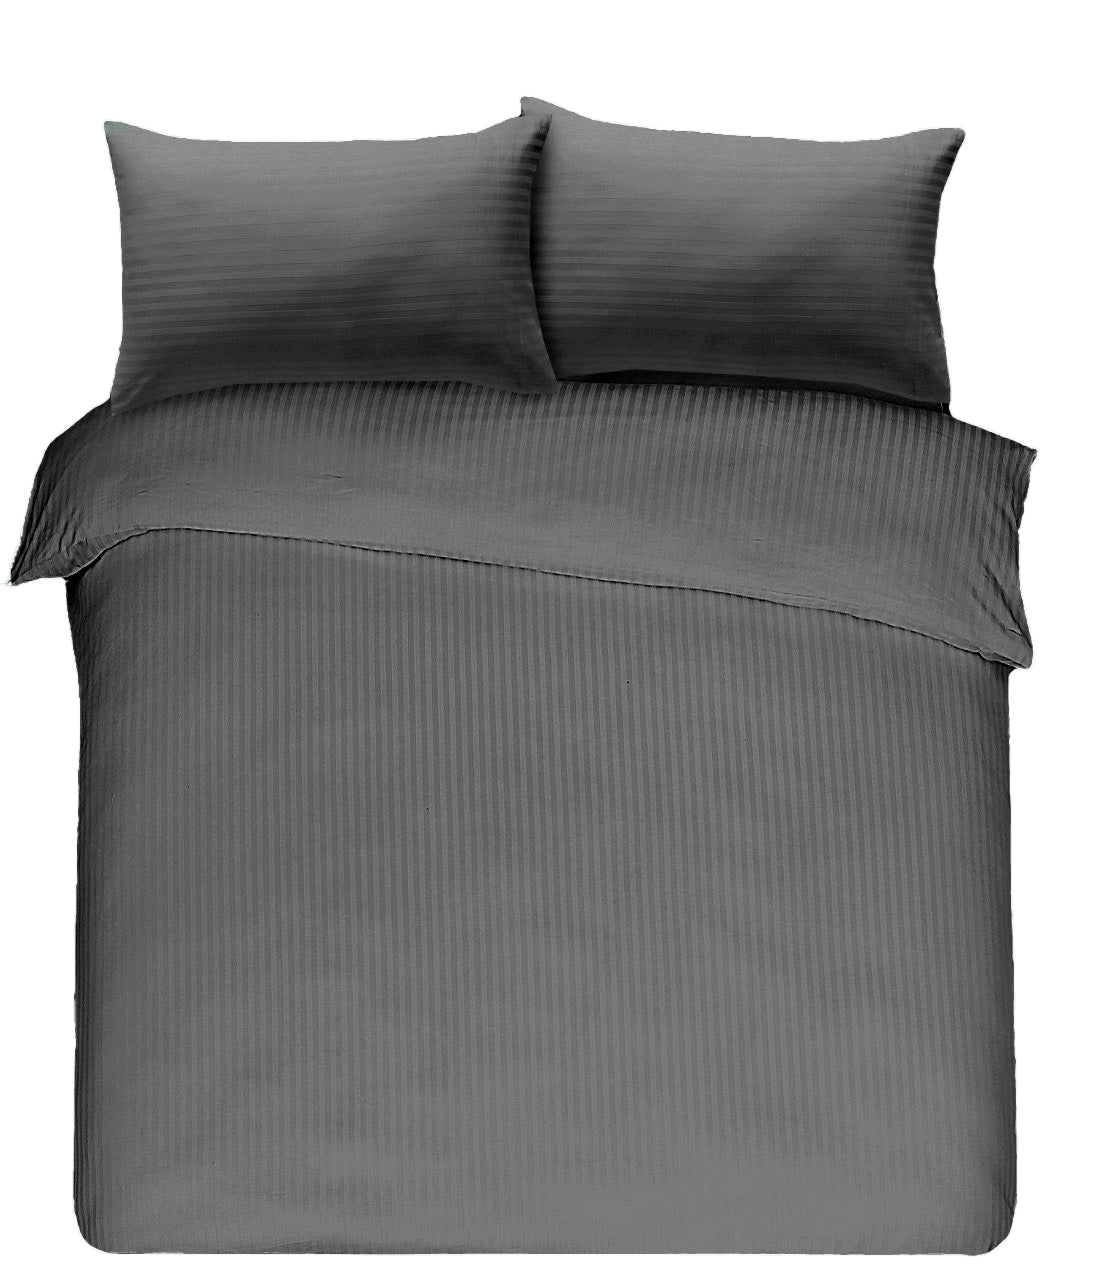 T300 Satin Stripe Pair of Pillowcases 100% Egyptian Cotton Bedroom Pillow Cover